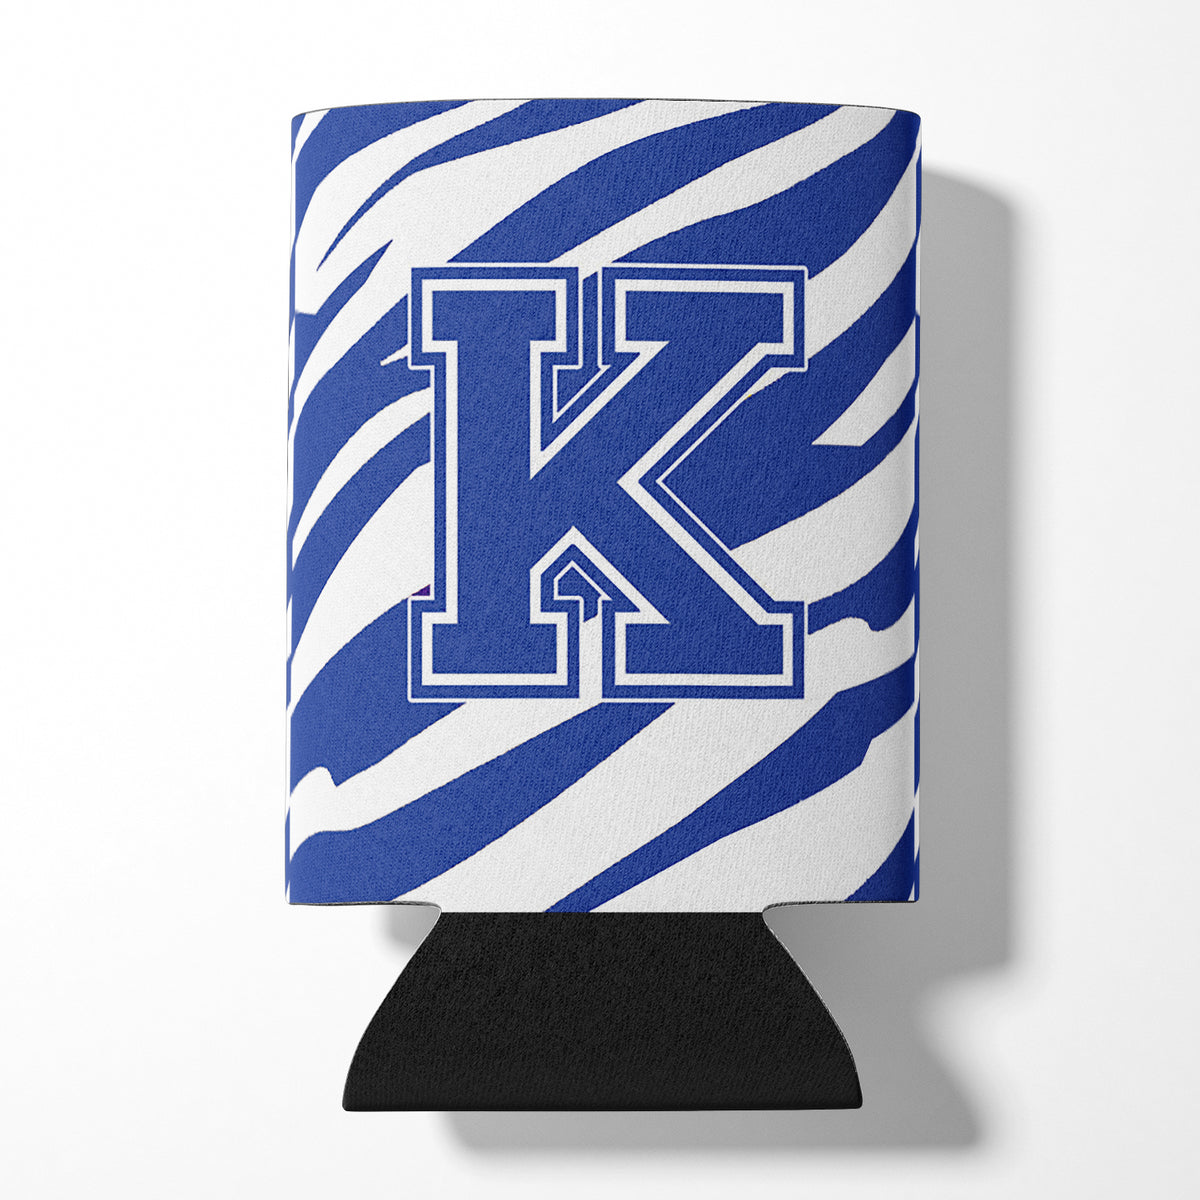 Letter K Initial Monogram - Tiger Stripe Blue and White Can Beverage Insulator Hugger.